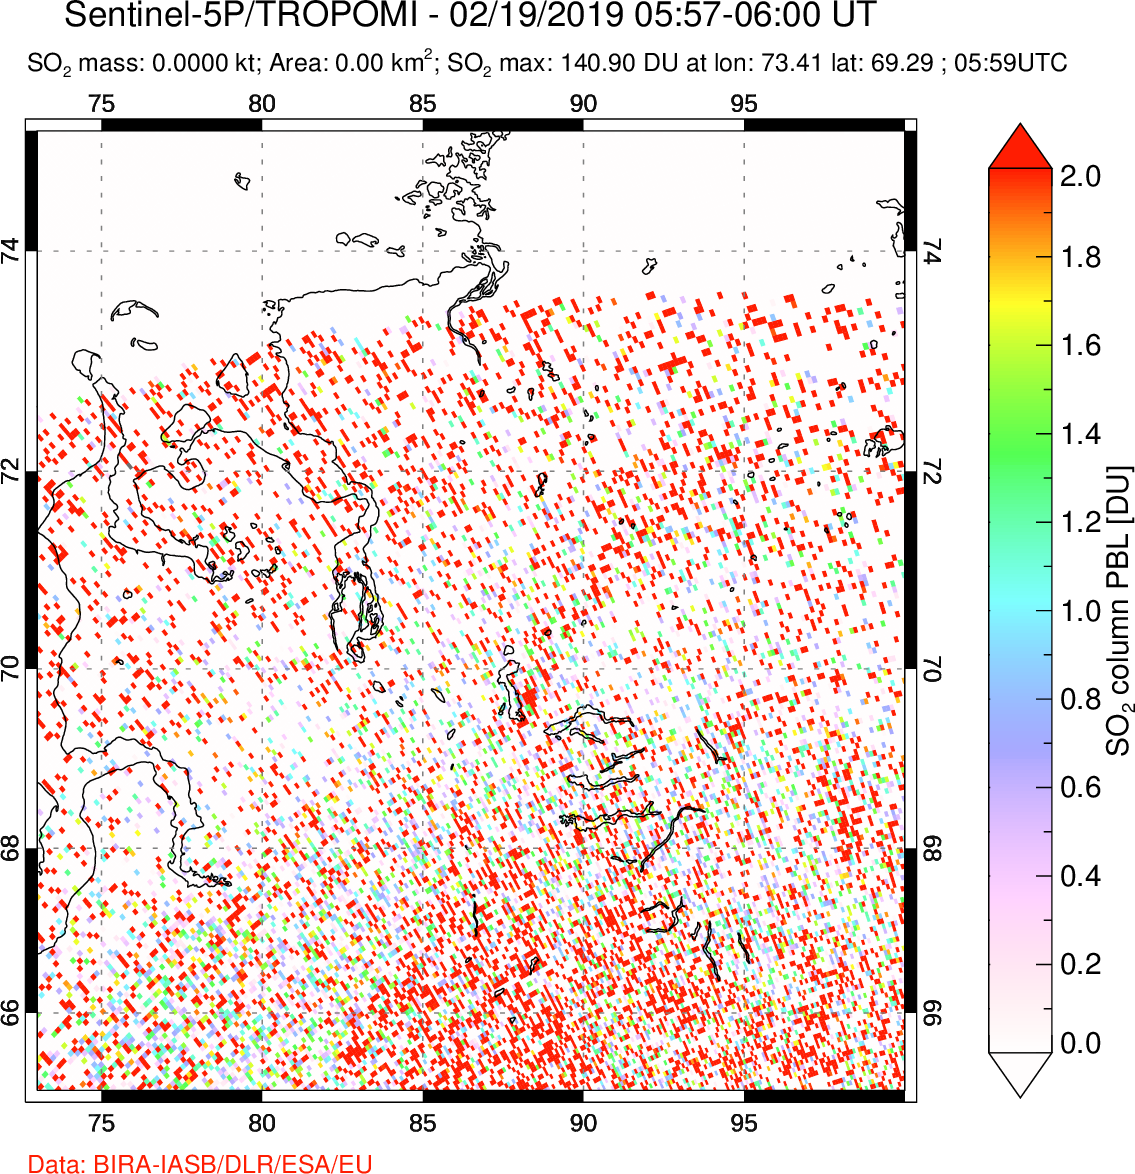 A sulfur dioxide image over Norilsk, Russian Federation on Feb 19, 2019.